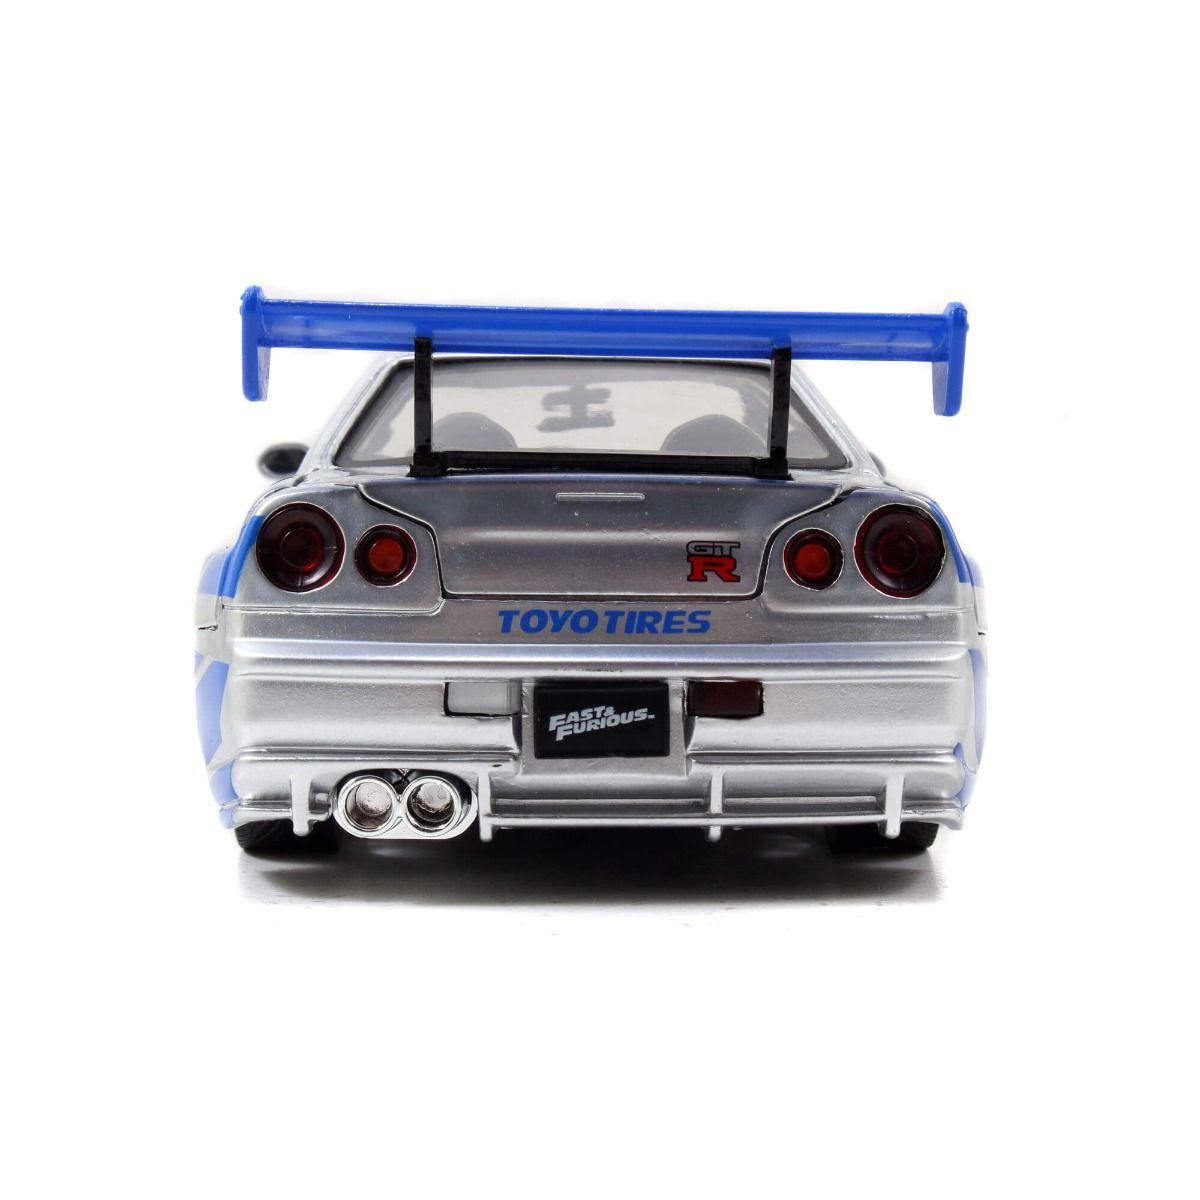 JAD97158 Fast and Furious - '02 Nissan Skyline GT-R 1:24 Scale Hollywood Ride - Jada Toys - Titan Pop Culture